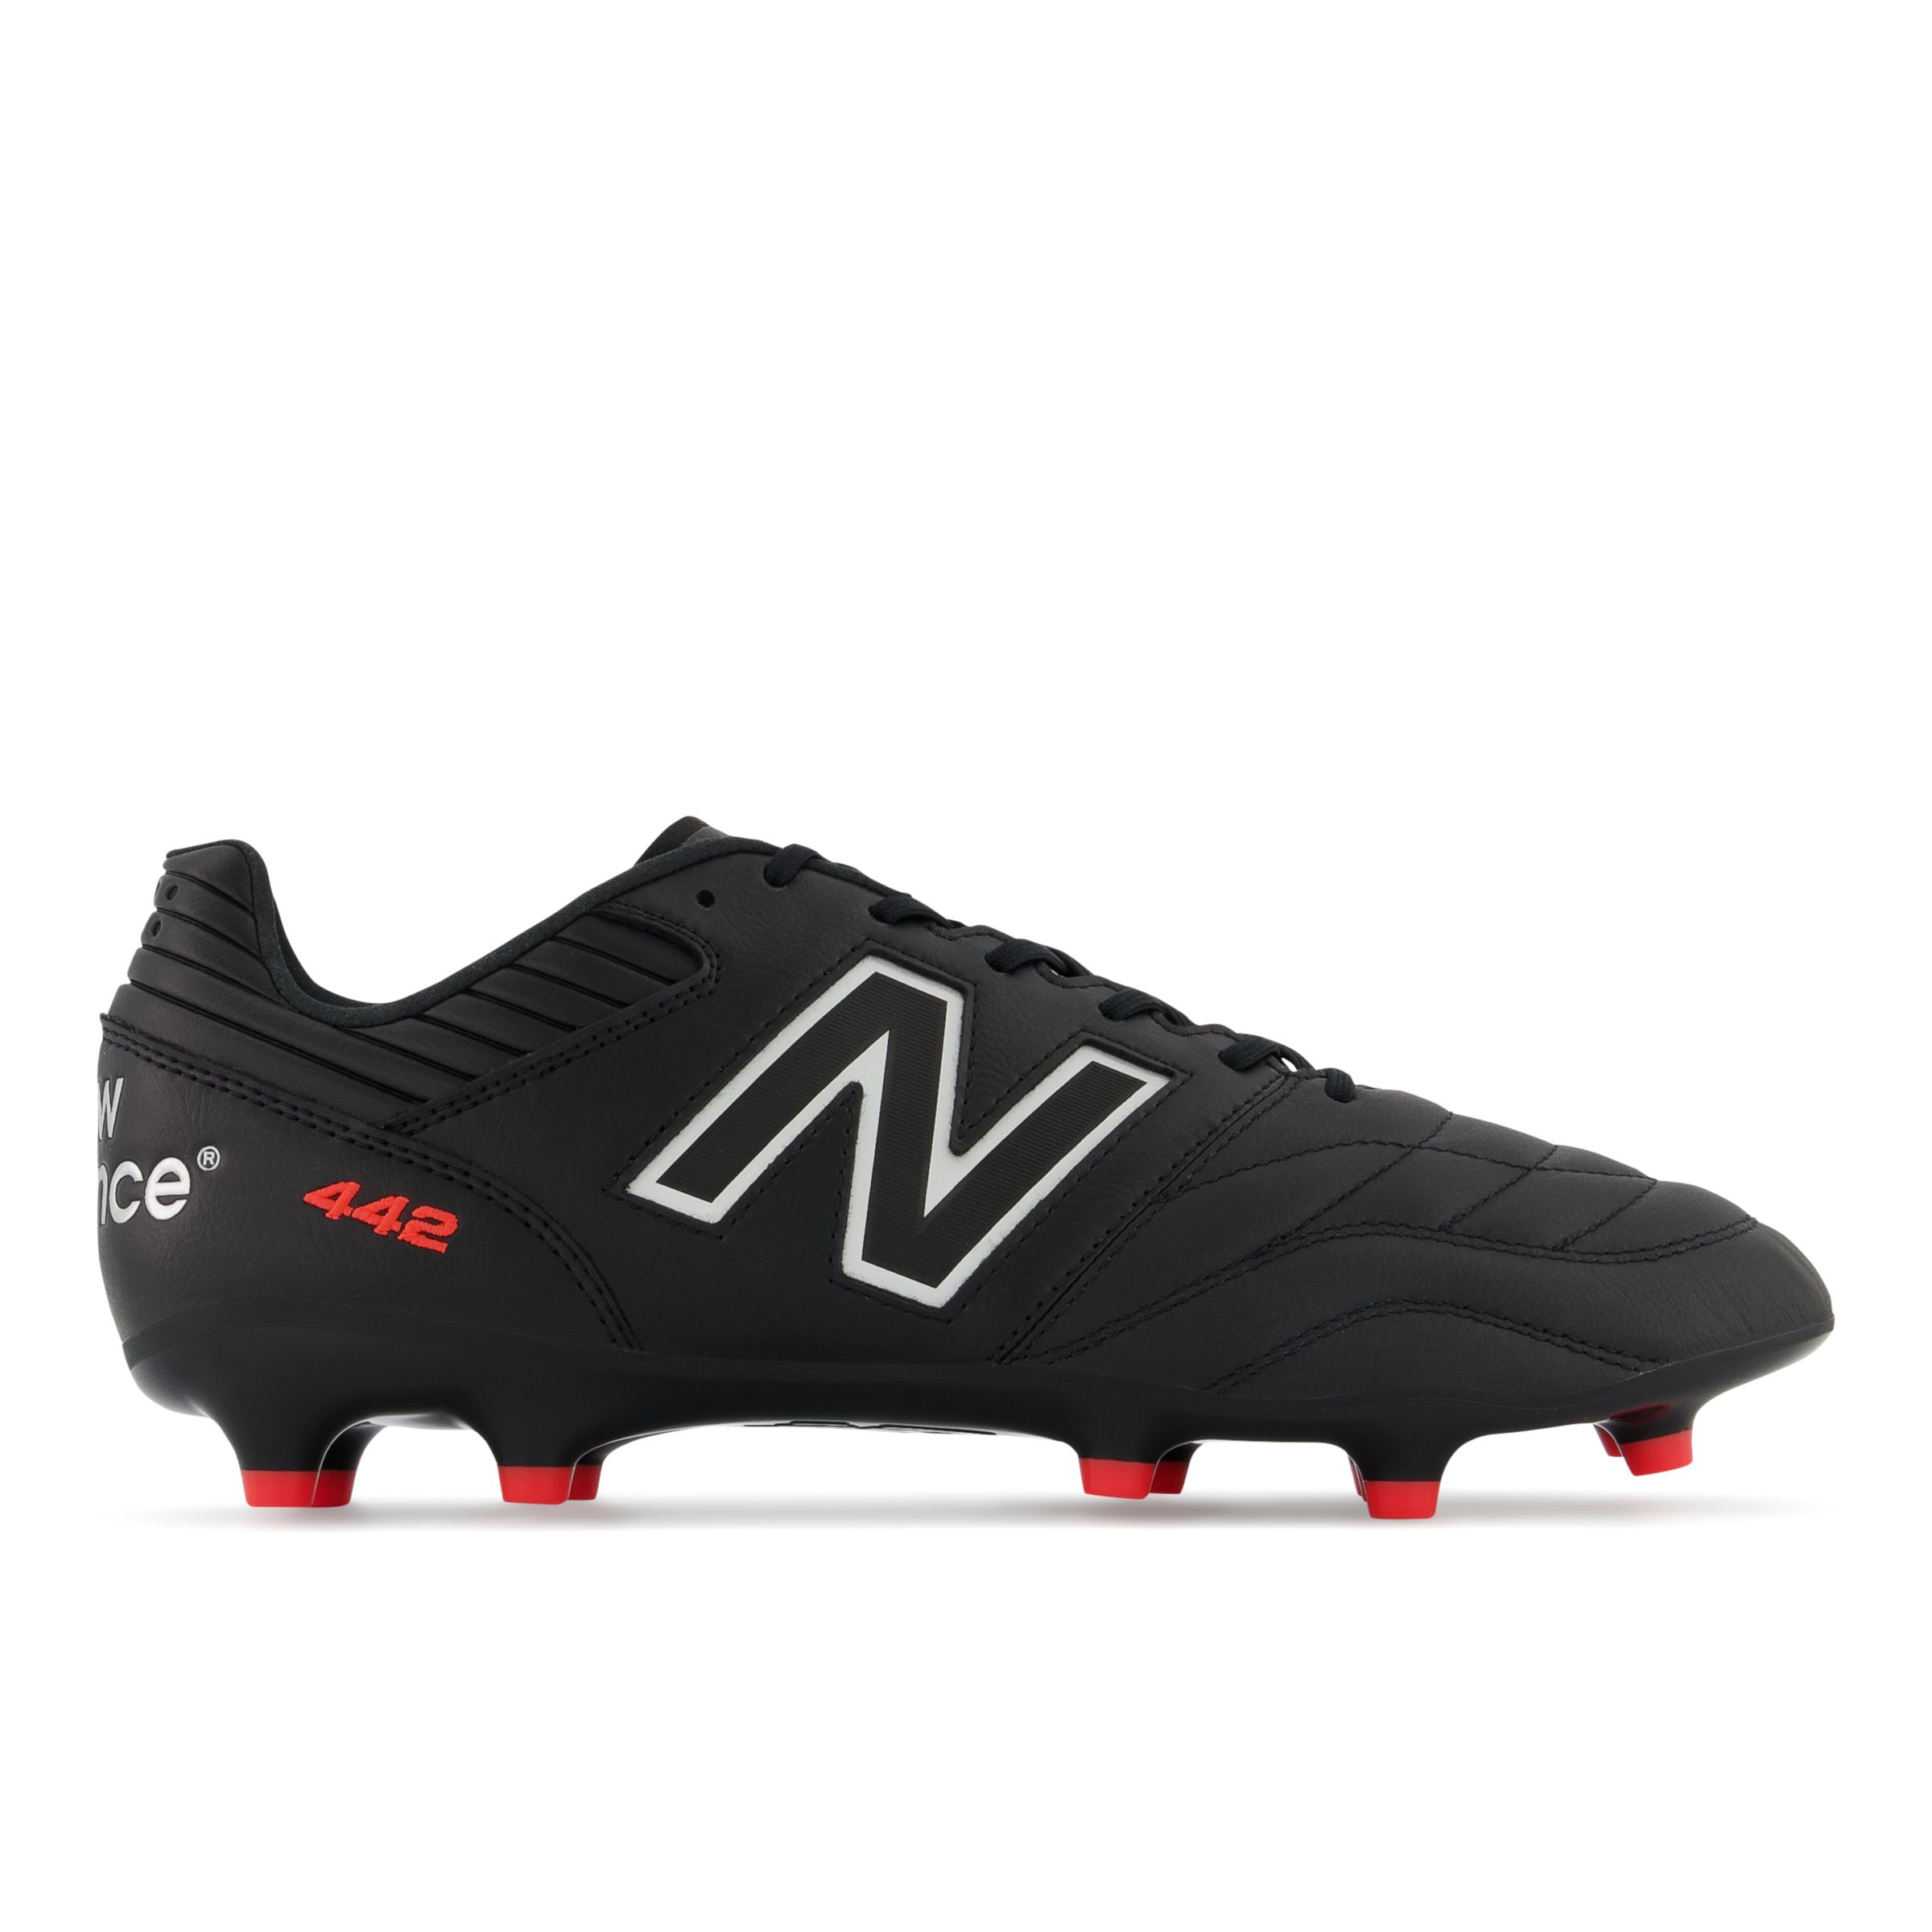 Men's Black Football Boots | 442 V2 Pro FG - New Balance